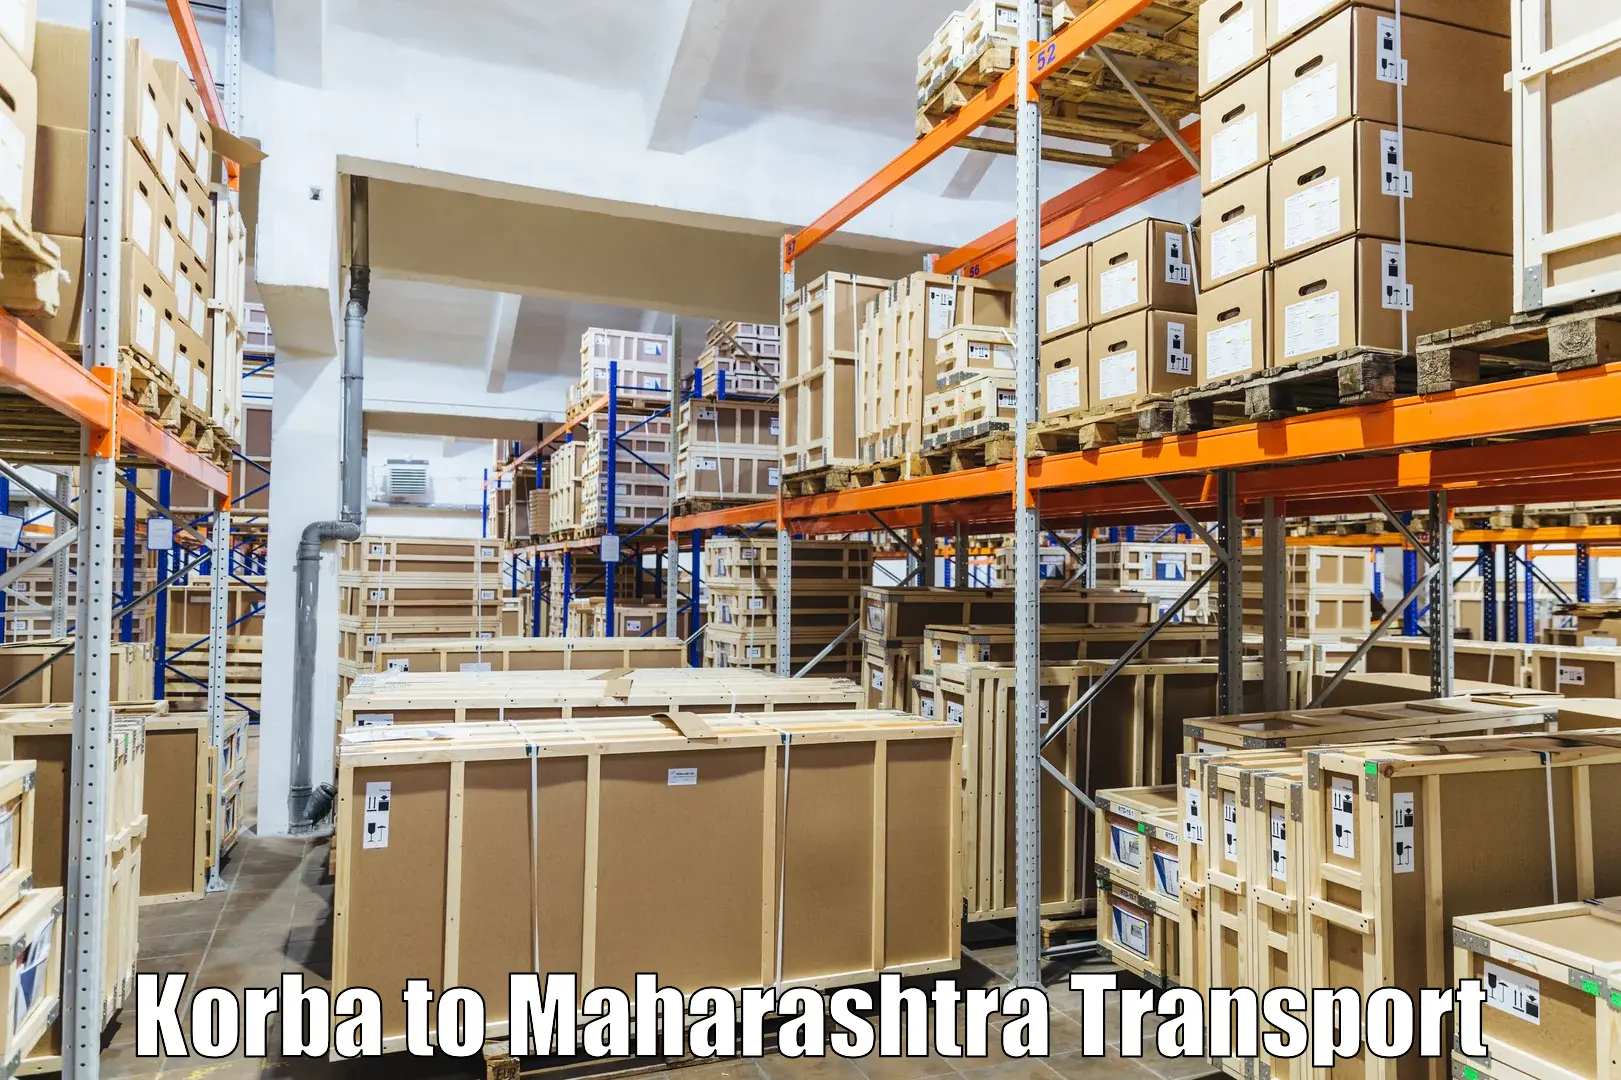 Transport in sharing in Korba to Raigarh Maharashtra